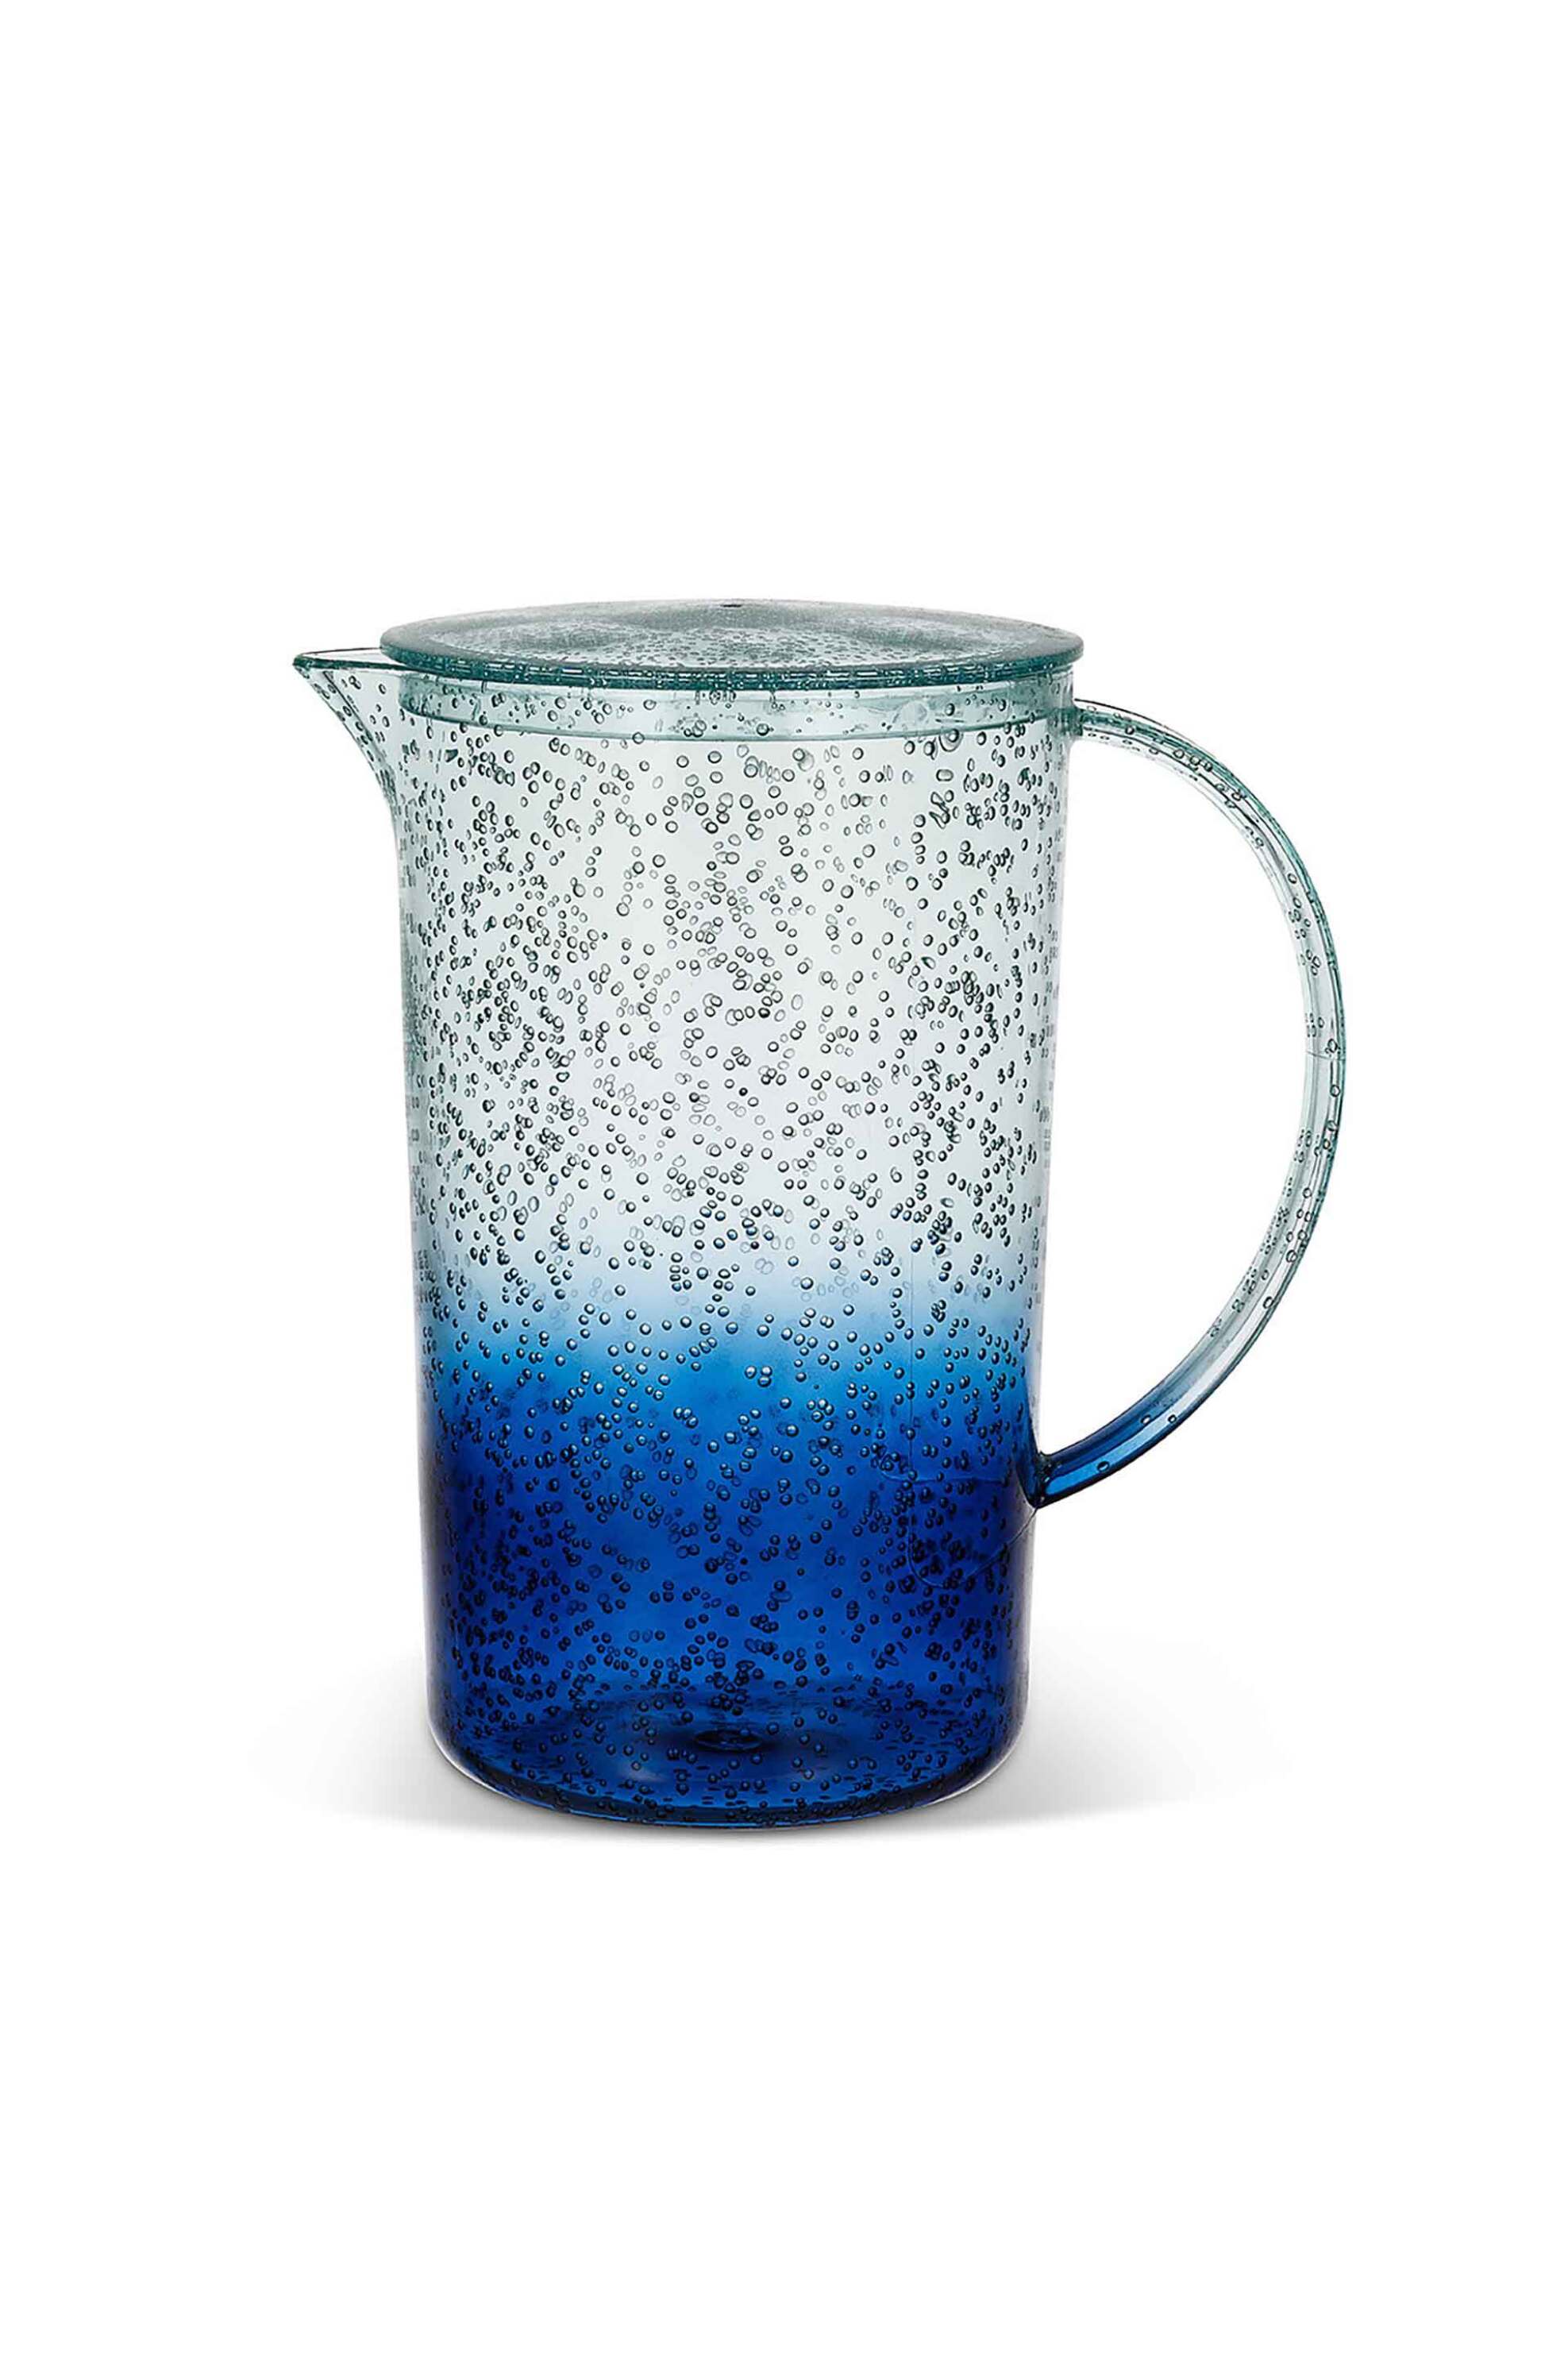 Home > ΚΟΥΖΙΝΑ > Υαλικά > Κανάτες & Μπουκάλια Coincasa πλαστική κανάτα με bubble effect 22 x 15 cm - 007365831 Μπλε